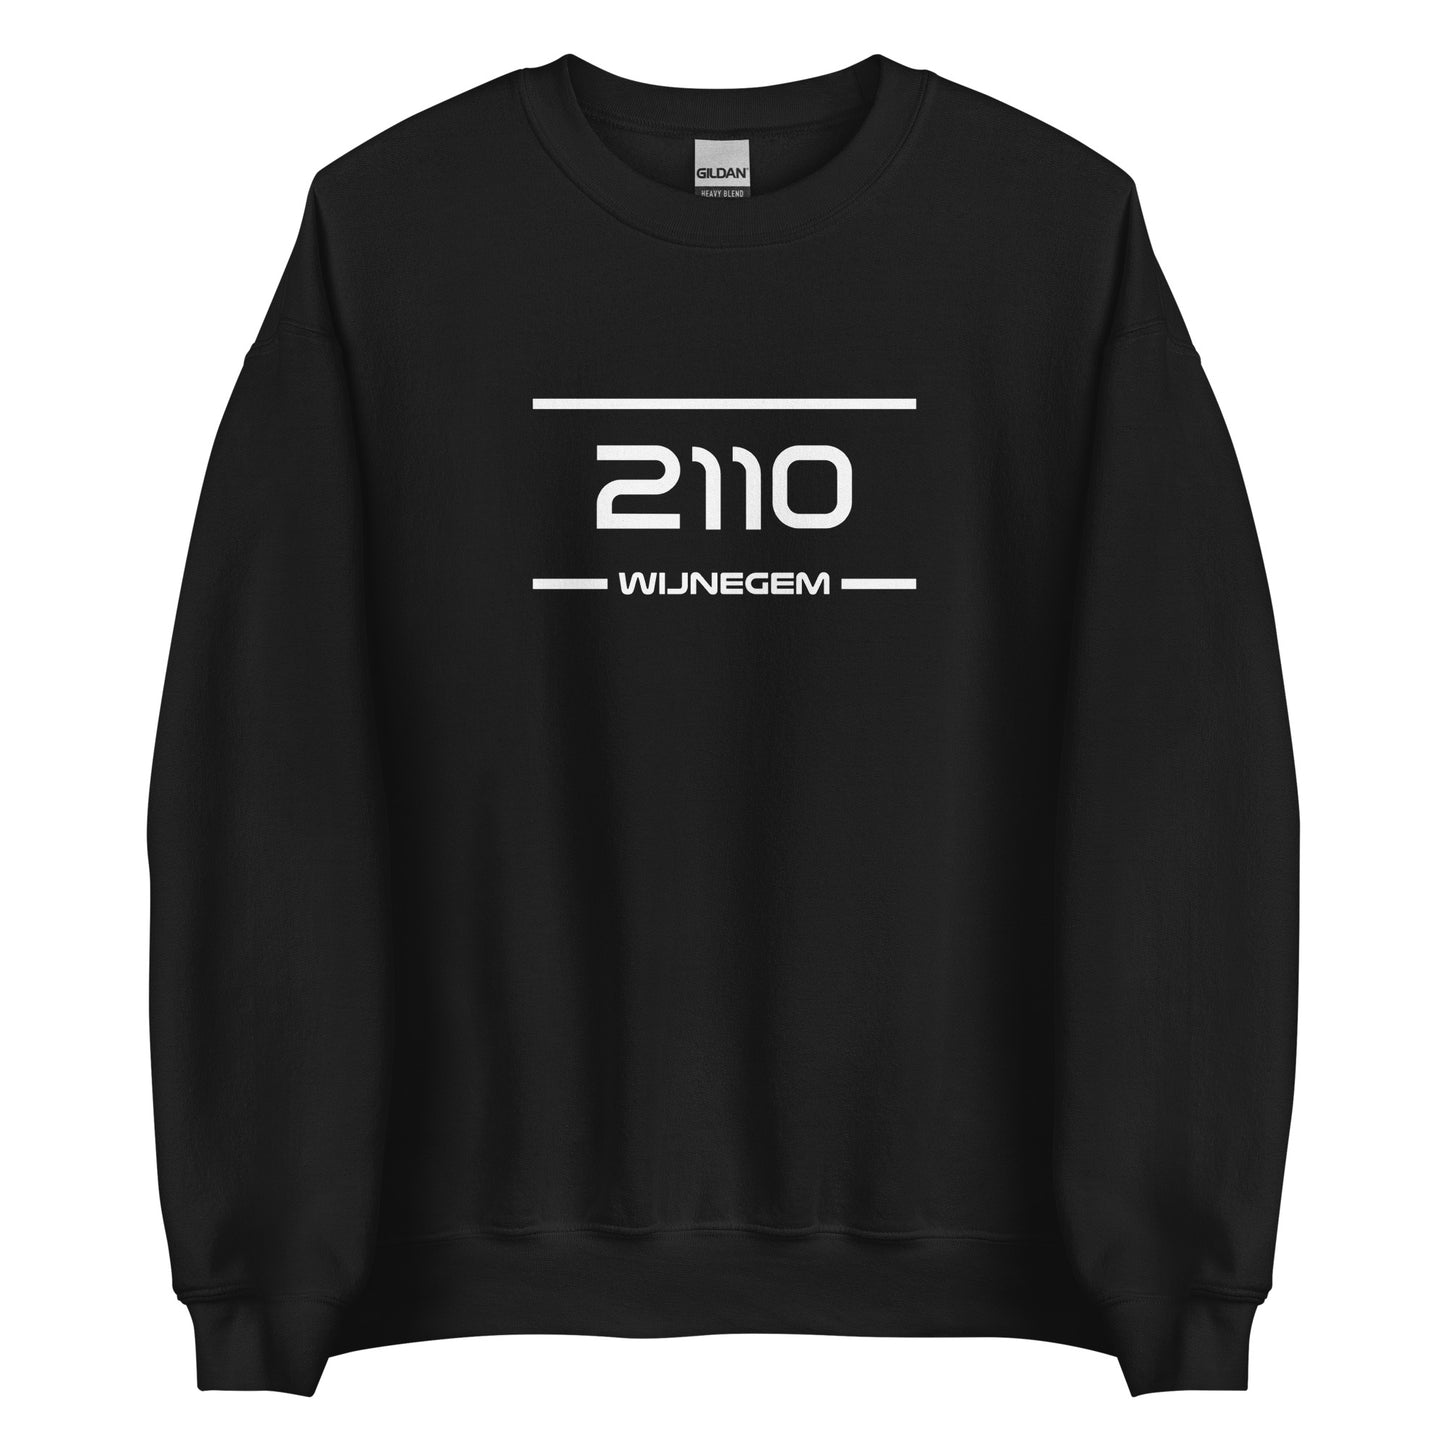 Sweater - 2110 - Wijnegem (M/V)